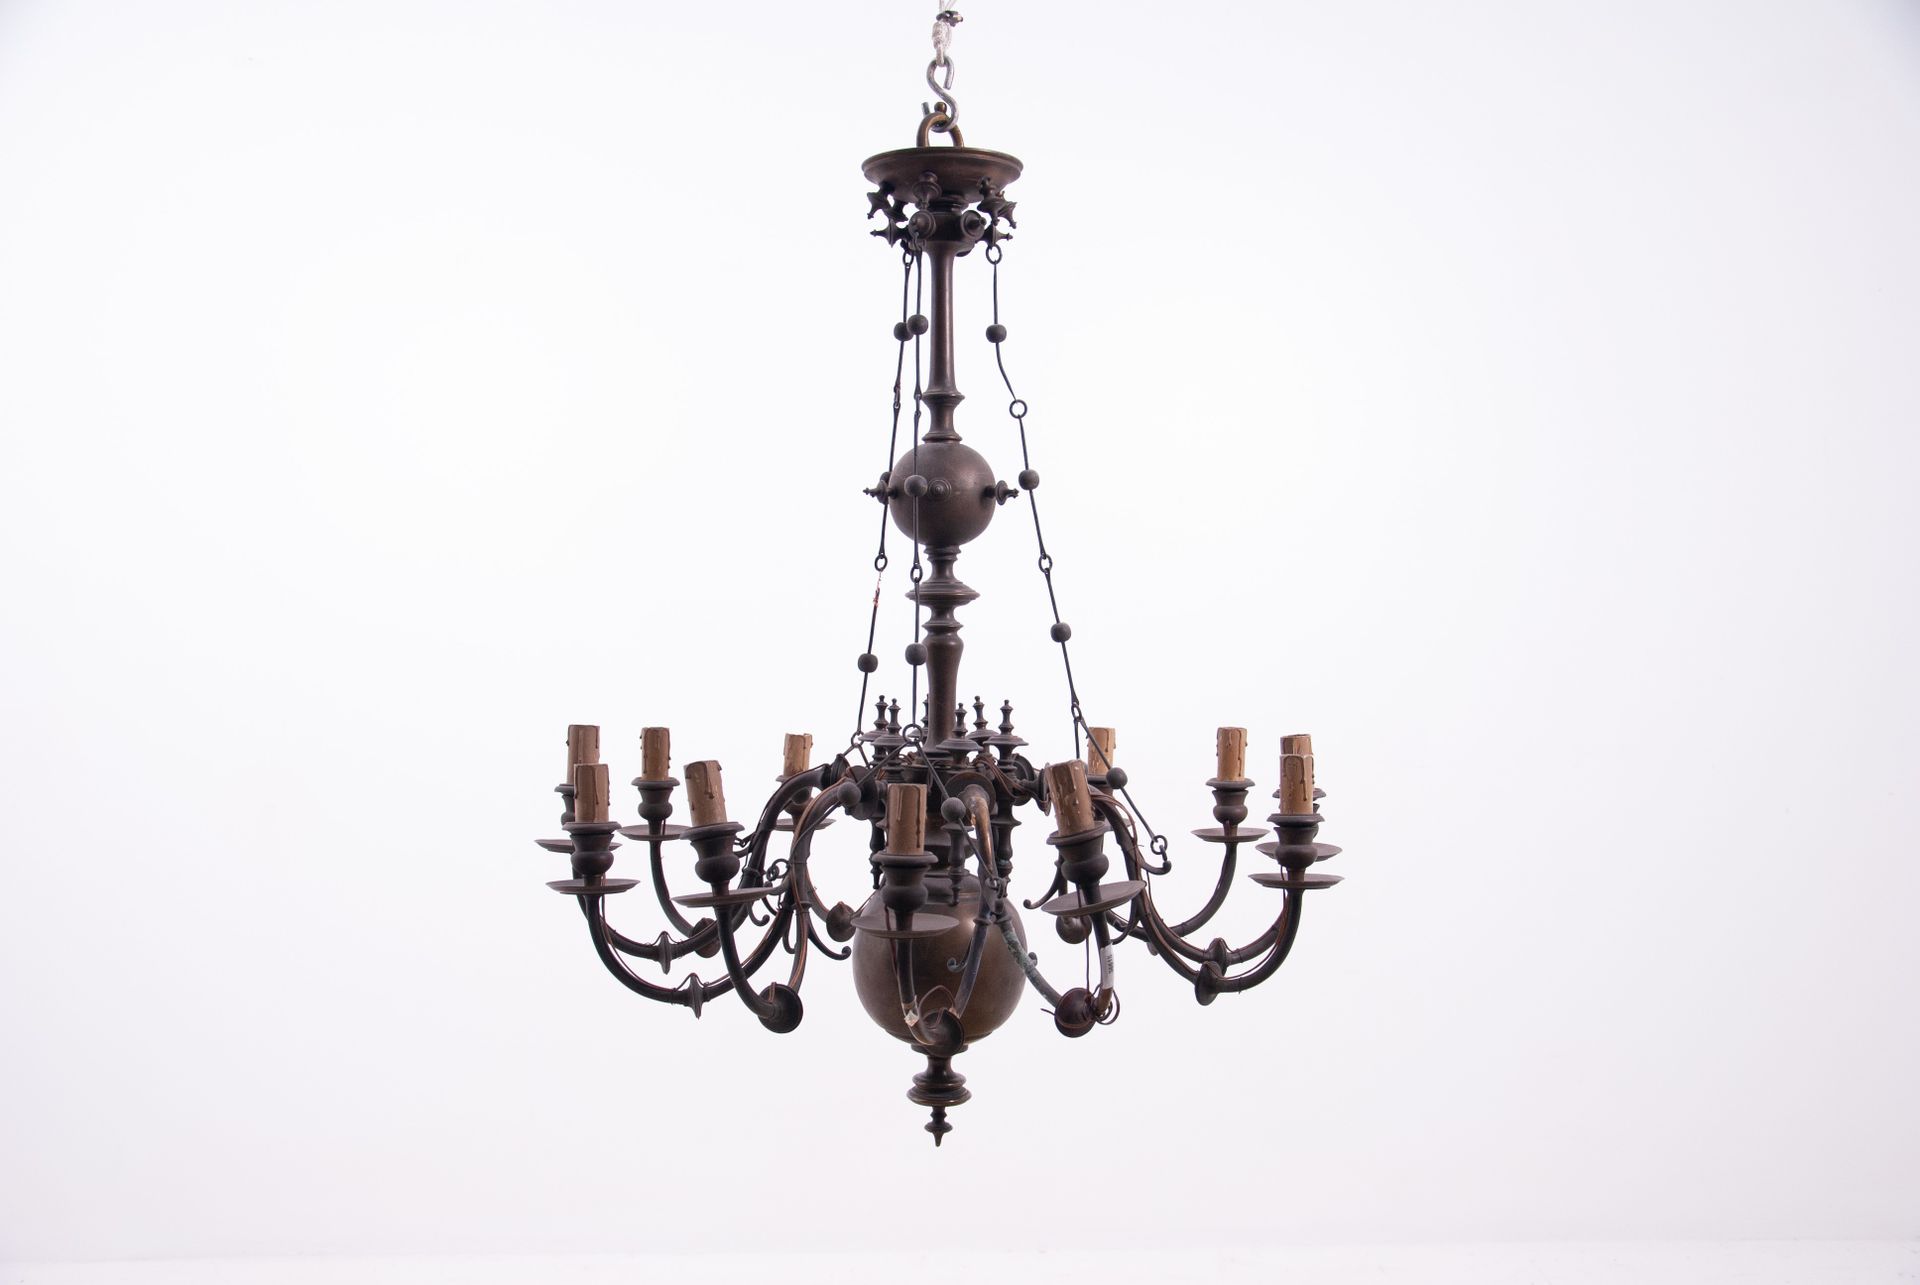 Chandelier 六臂十二灯青铜镀釉枝形吊灯。北欧。十九世纪晚期。有瑕疵和裂缝。高约 95 厘米。